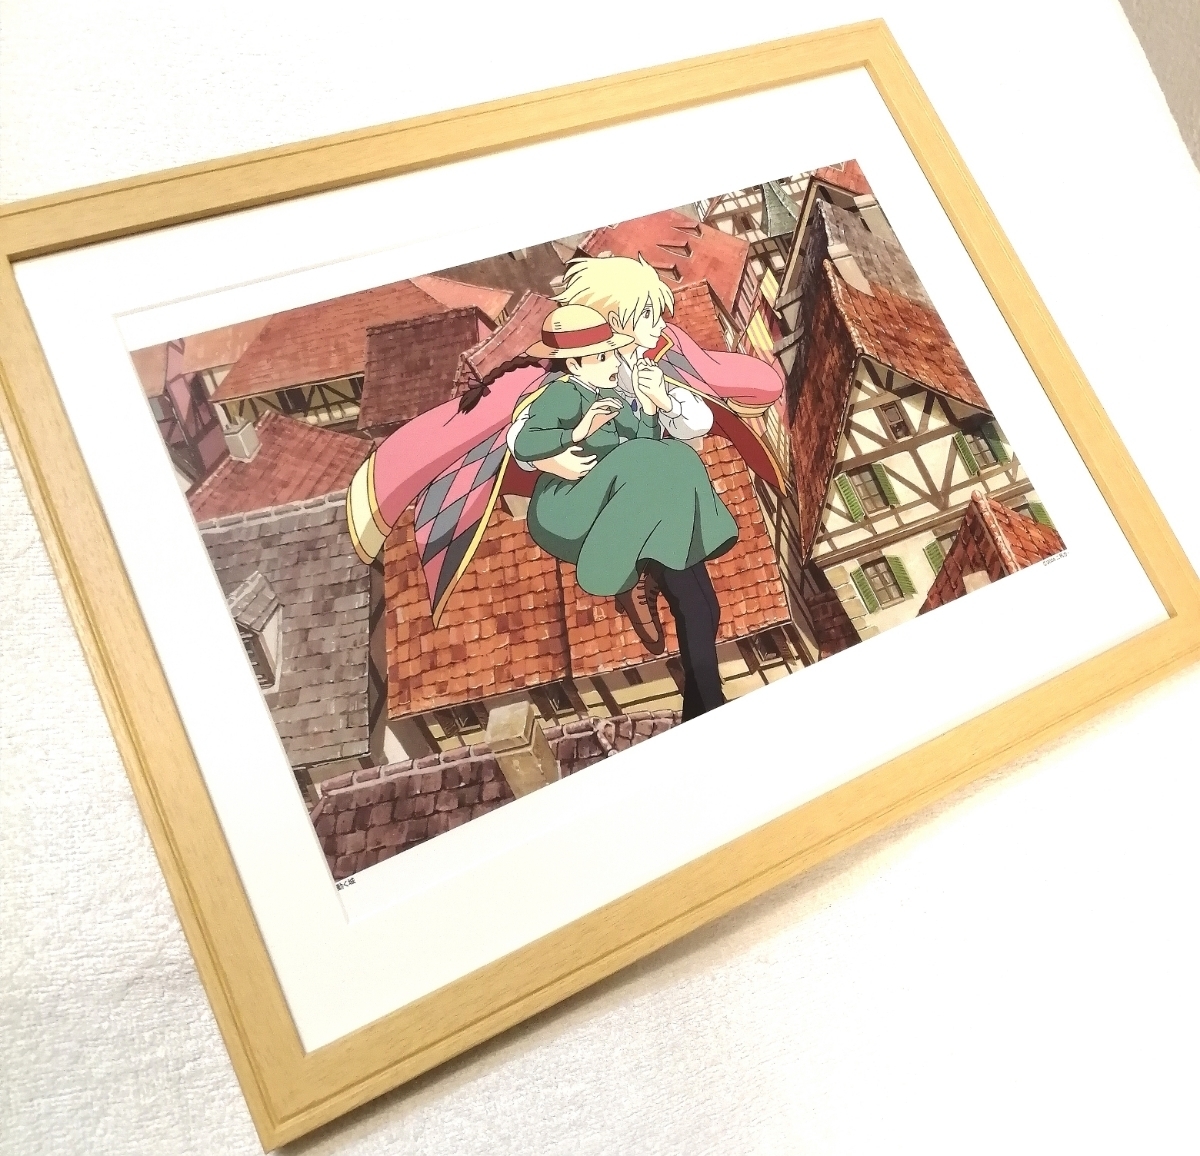  super-rare! Studio Ghibli is uru. move castle [ frame goods ] Ghibli calendar poster ornament picture postcard . made original picture Miyazaki .b